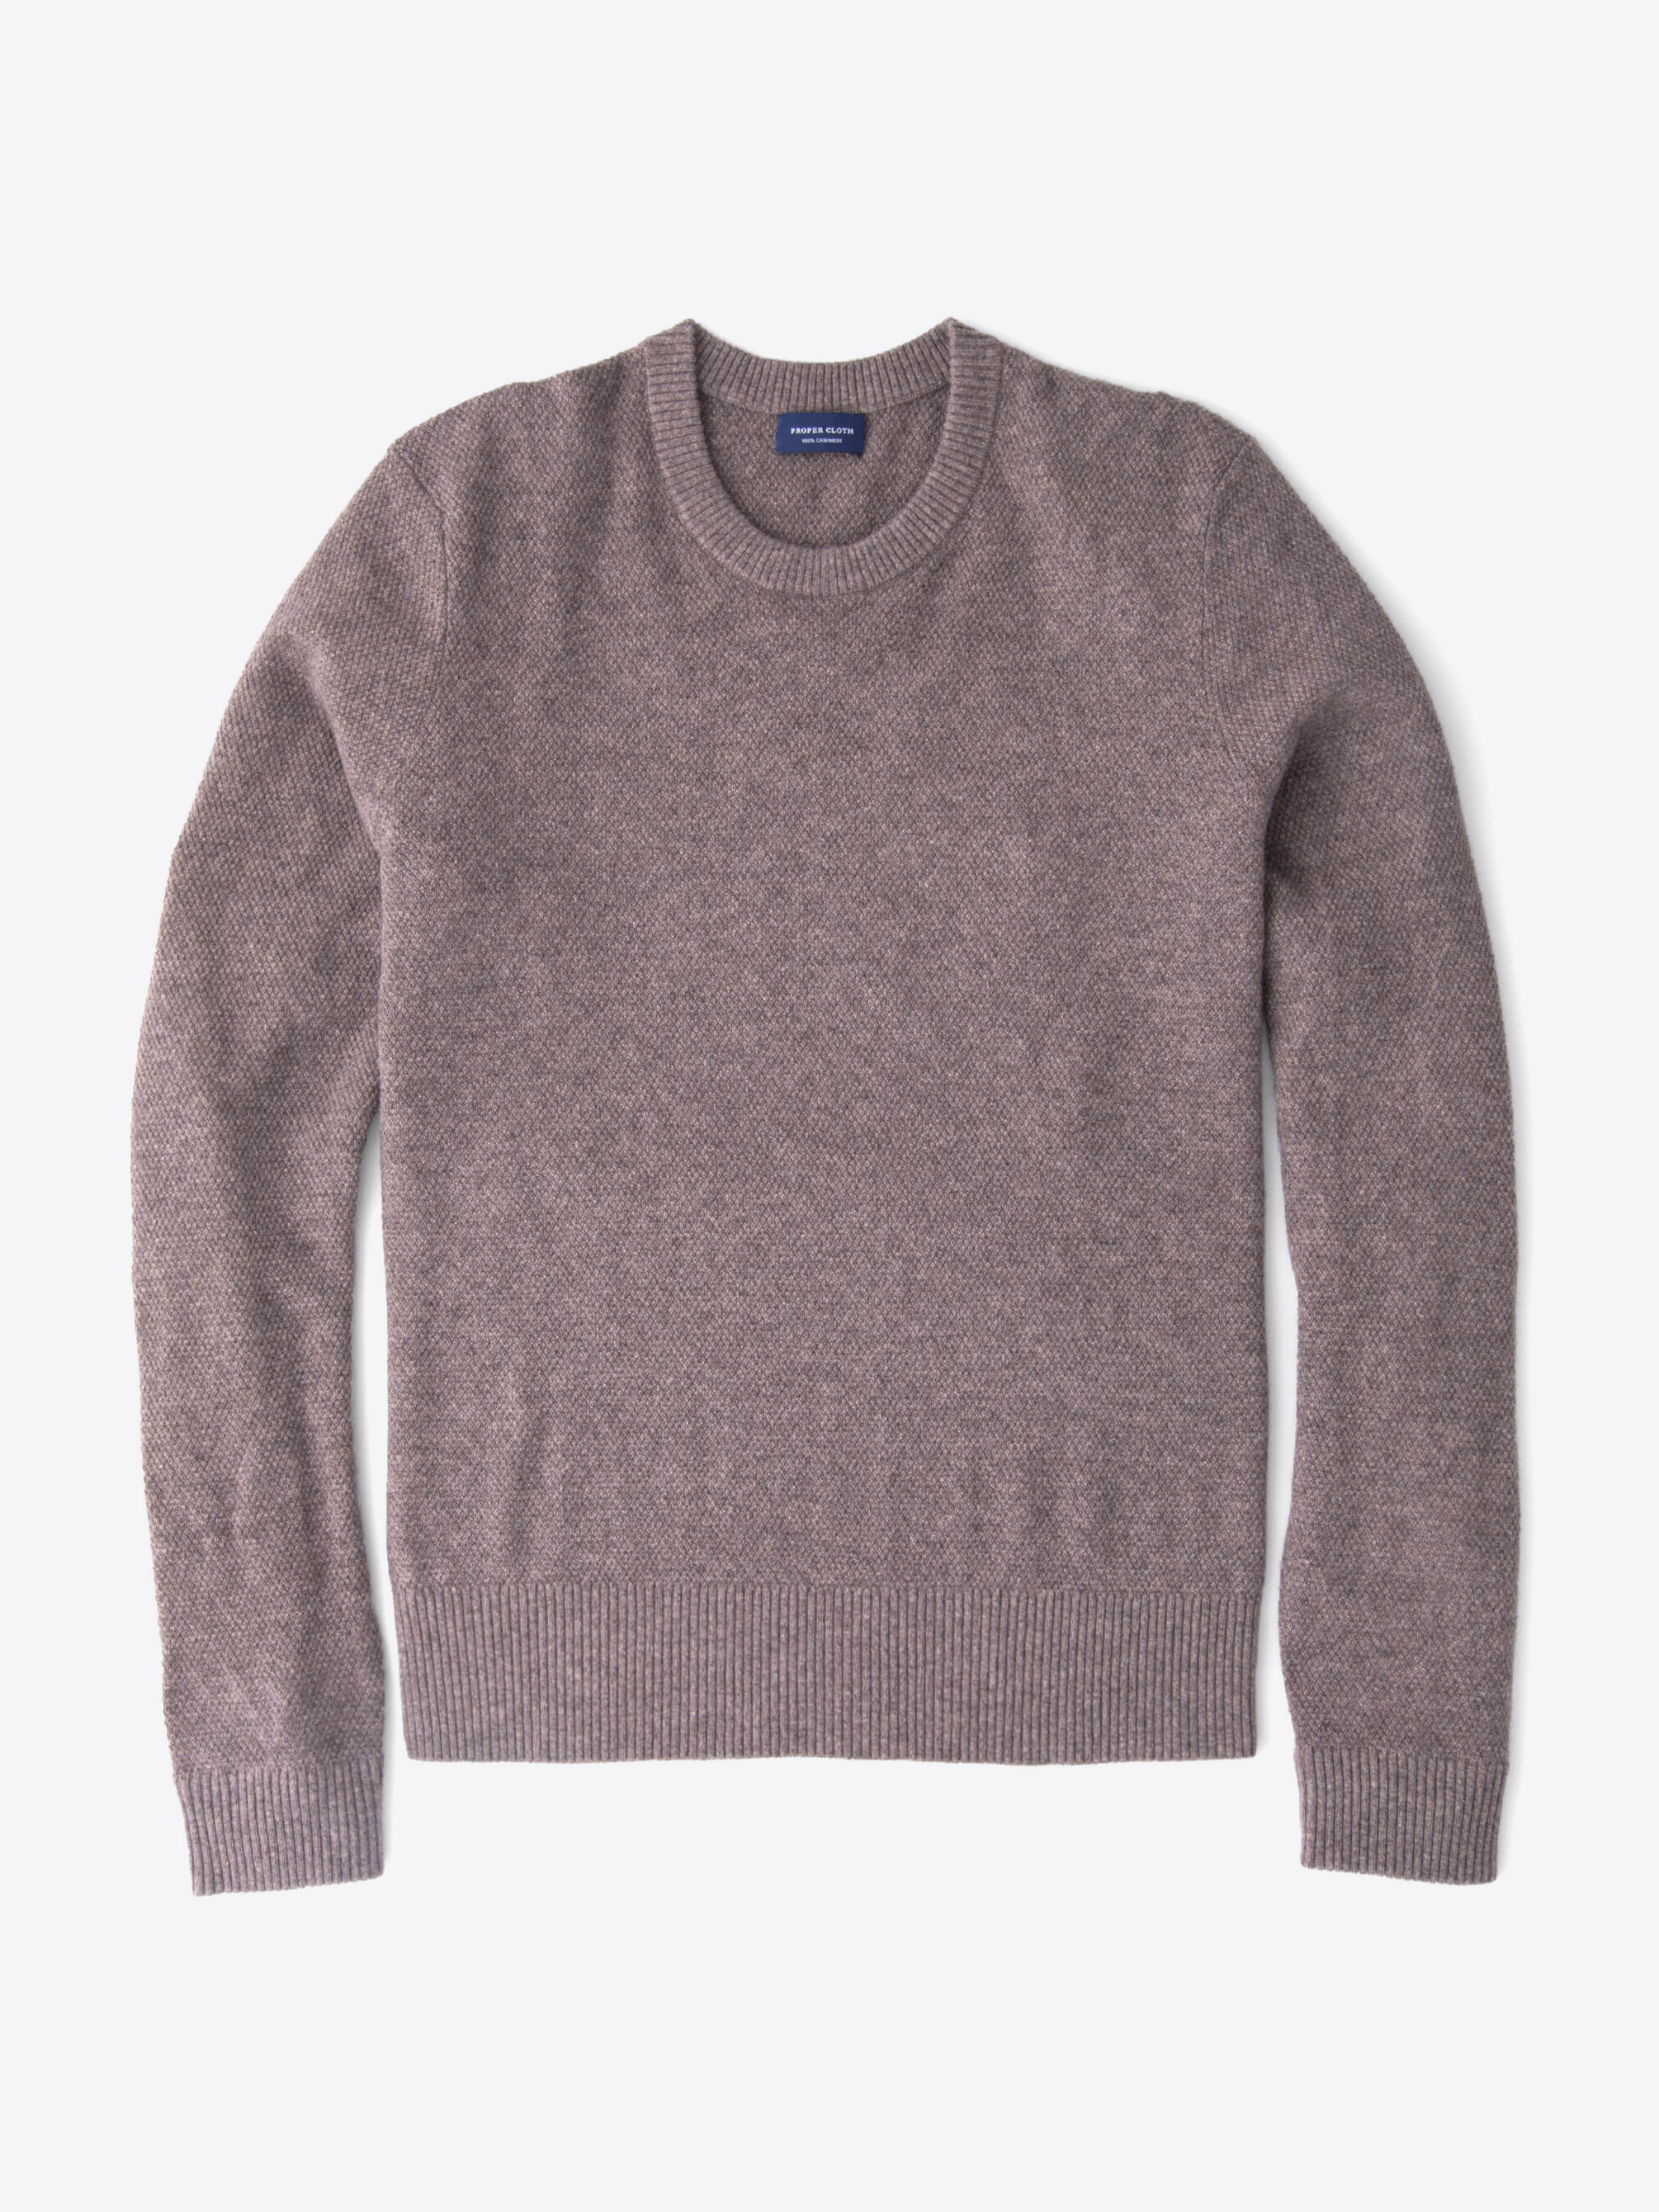 Zoom Image of Mocha Cobble Stitch Cashmere Crewneck Sweater